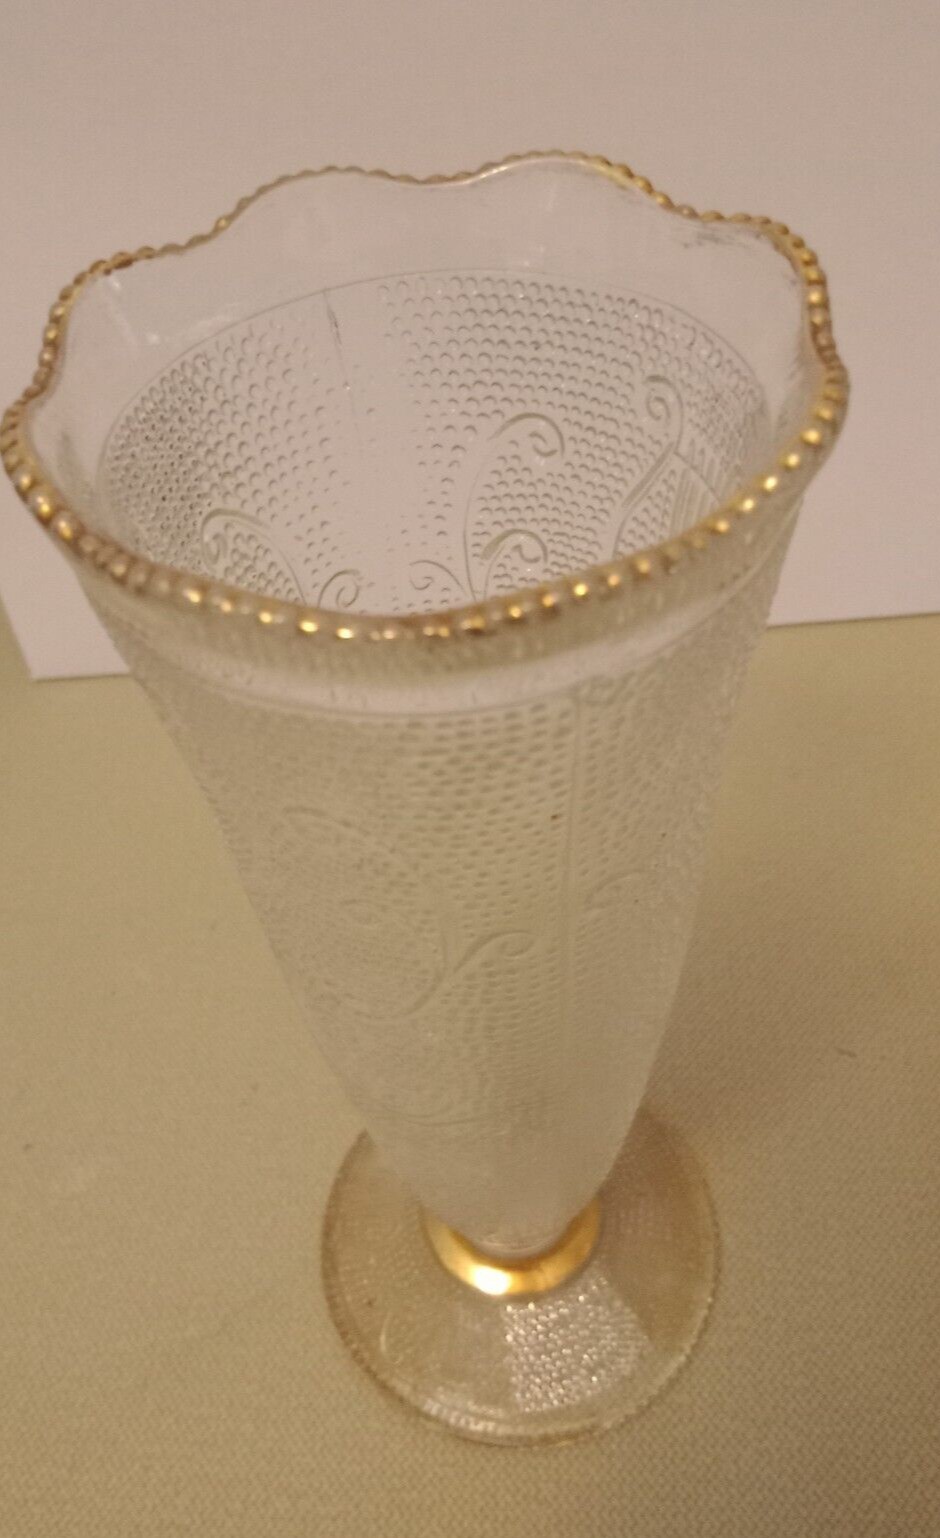 Jeannette Co. Depression glass vase harp pattern 7.5 inches